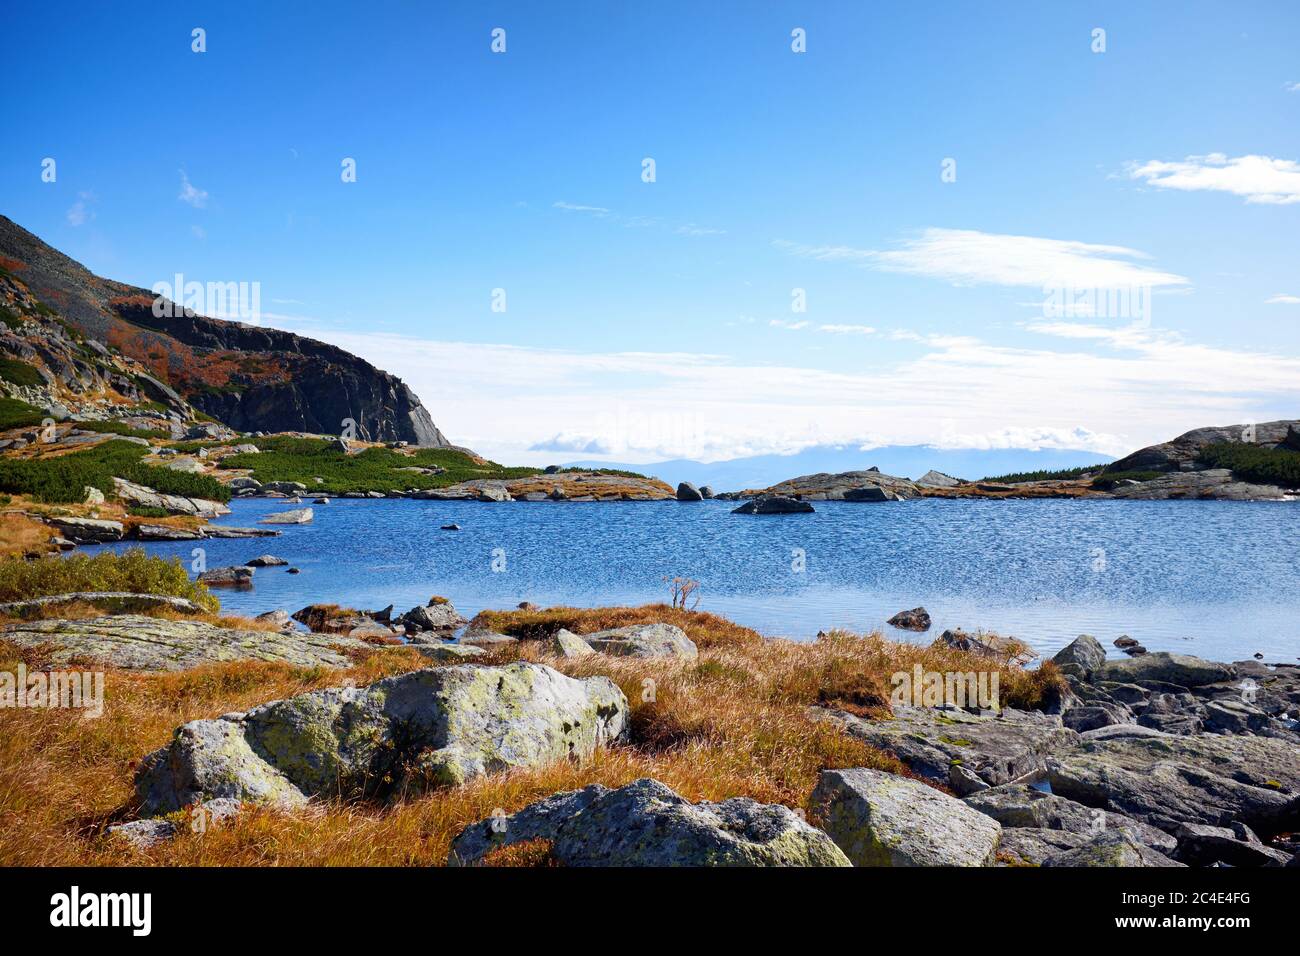 Pleso nad Skokom lake near to Strbske Pleso in High Tatras National Park in  Slovakia Stock Photo - Alamy